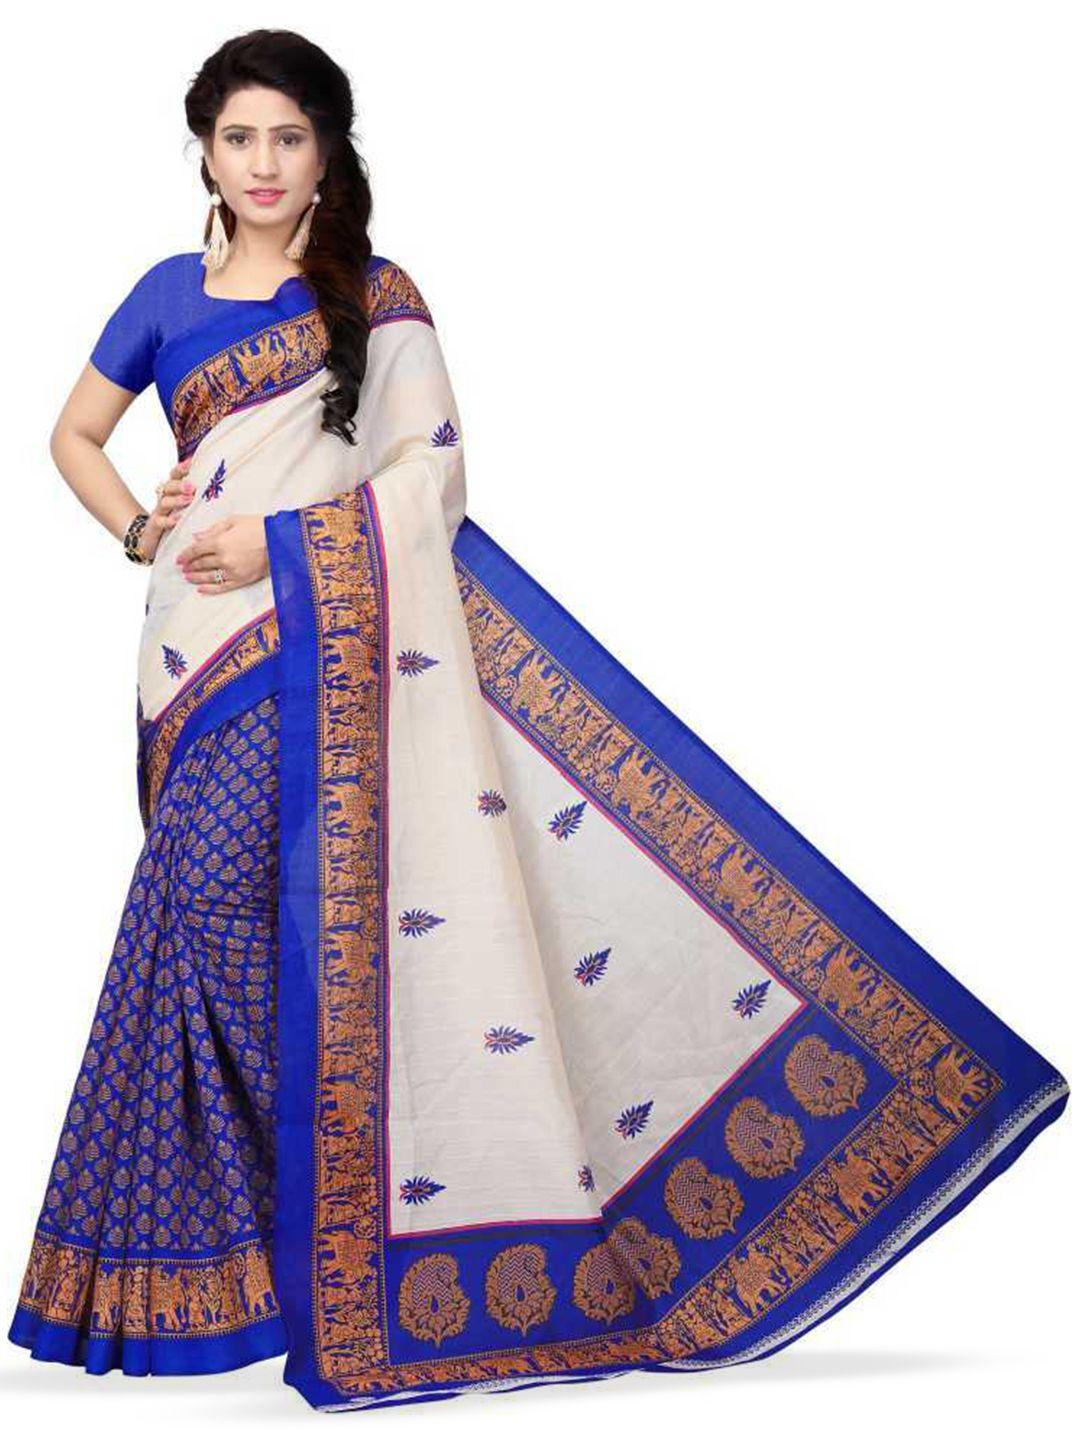 mitera-cream-coloured-&-blue-ethnic-motifs-printed-saree